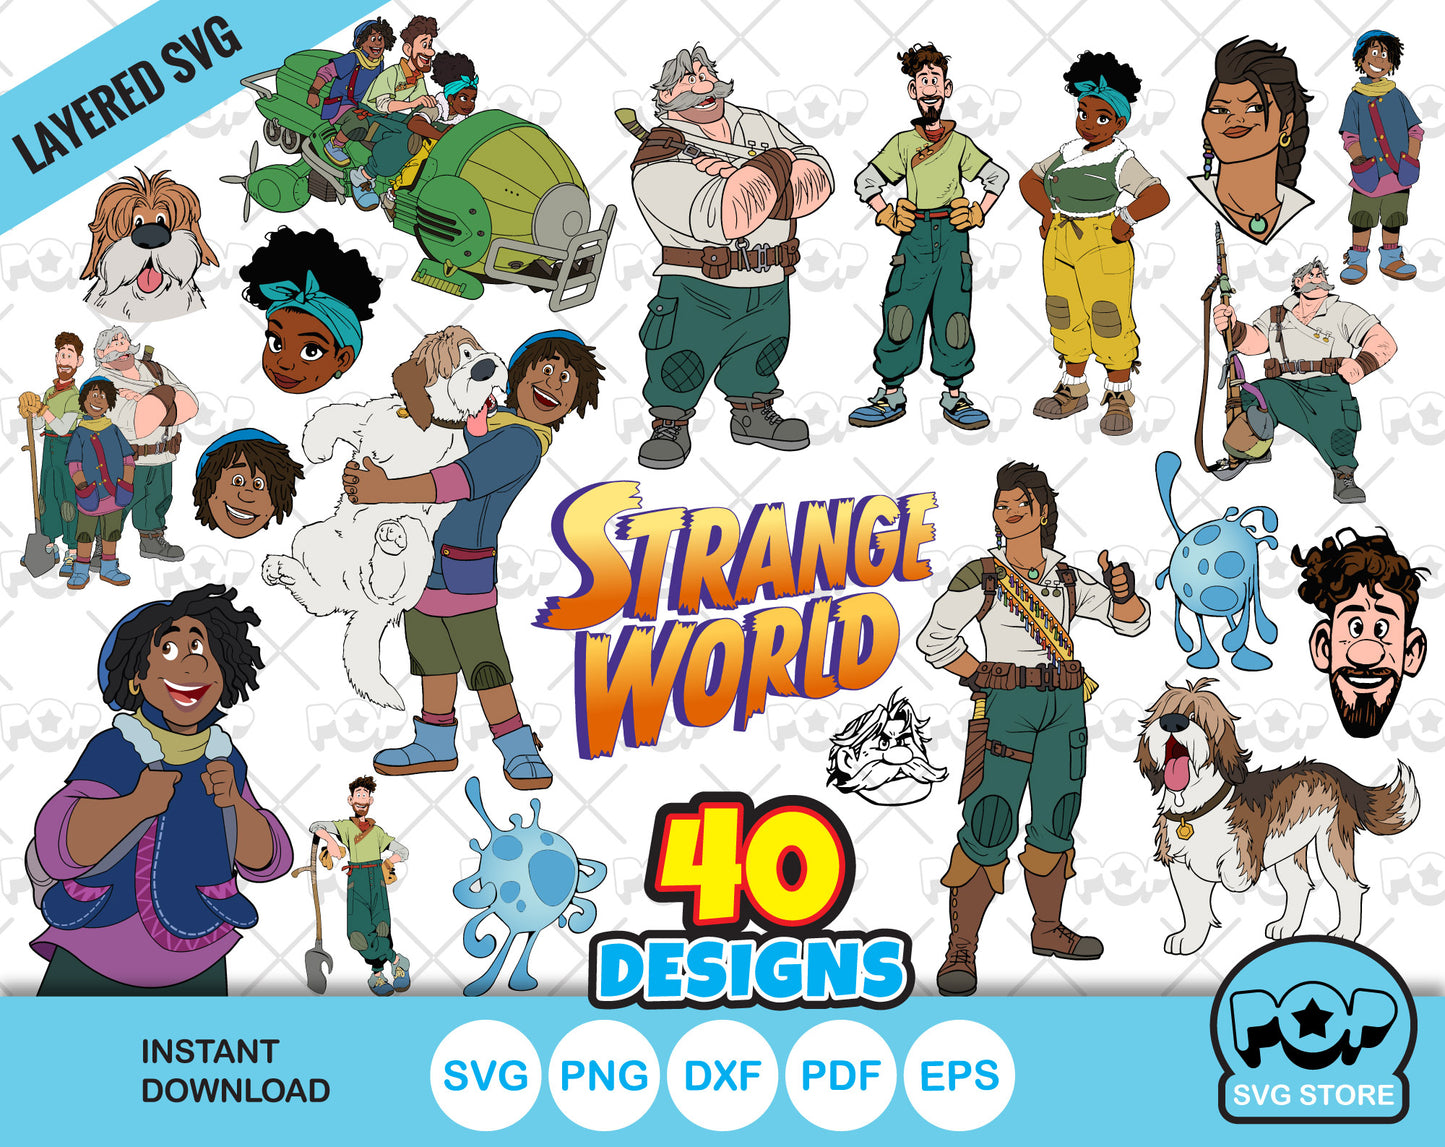 Disney Strange World clipart set, Strange World SVG cut files for Cricut / Silhouette, instant download